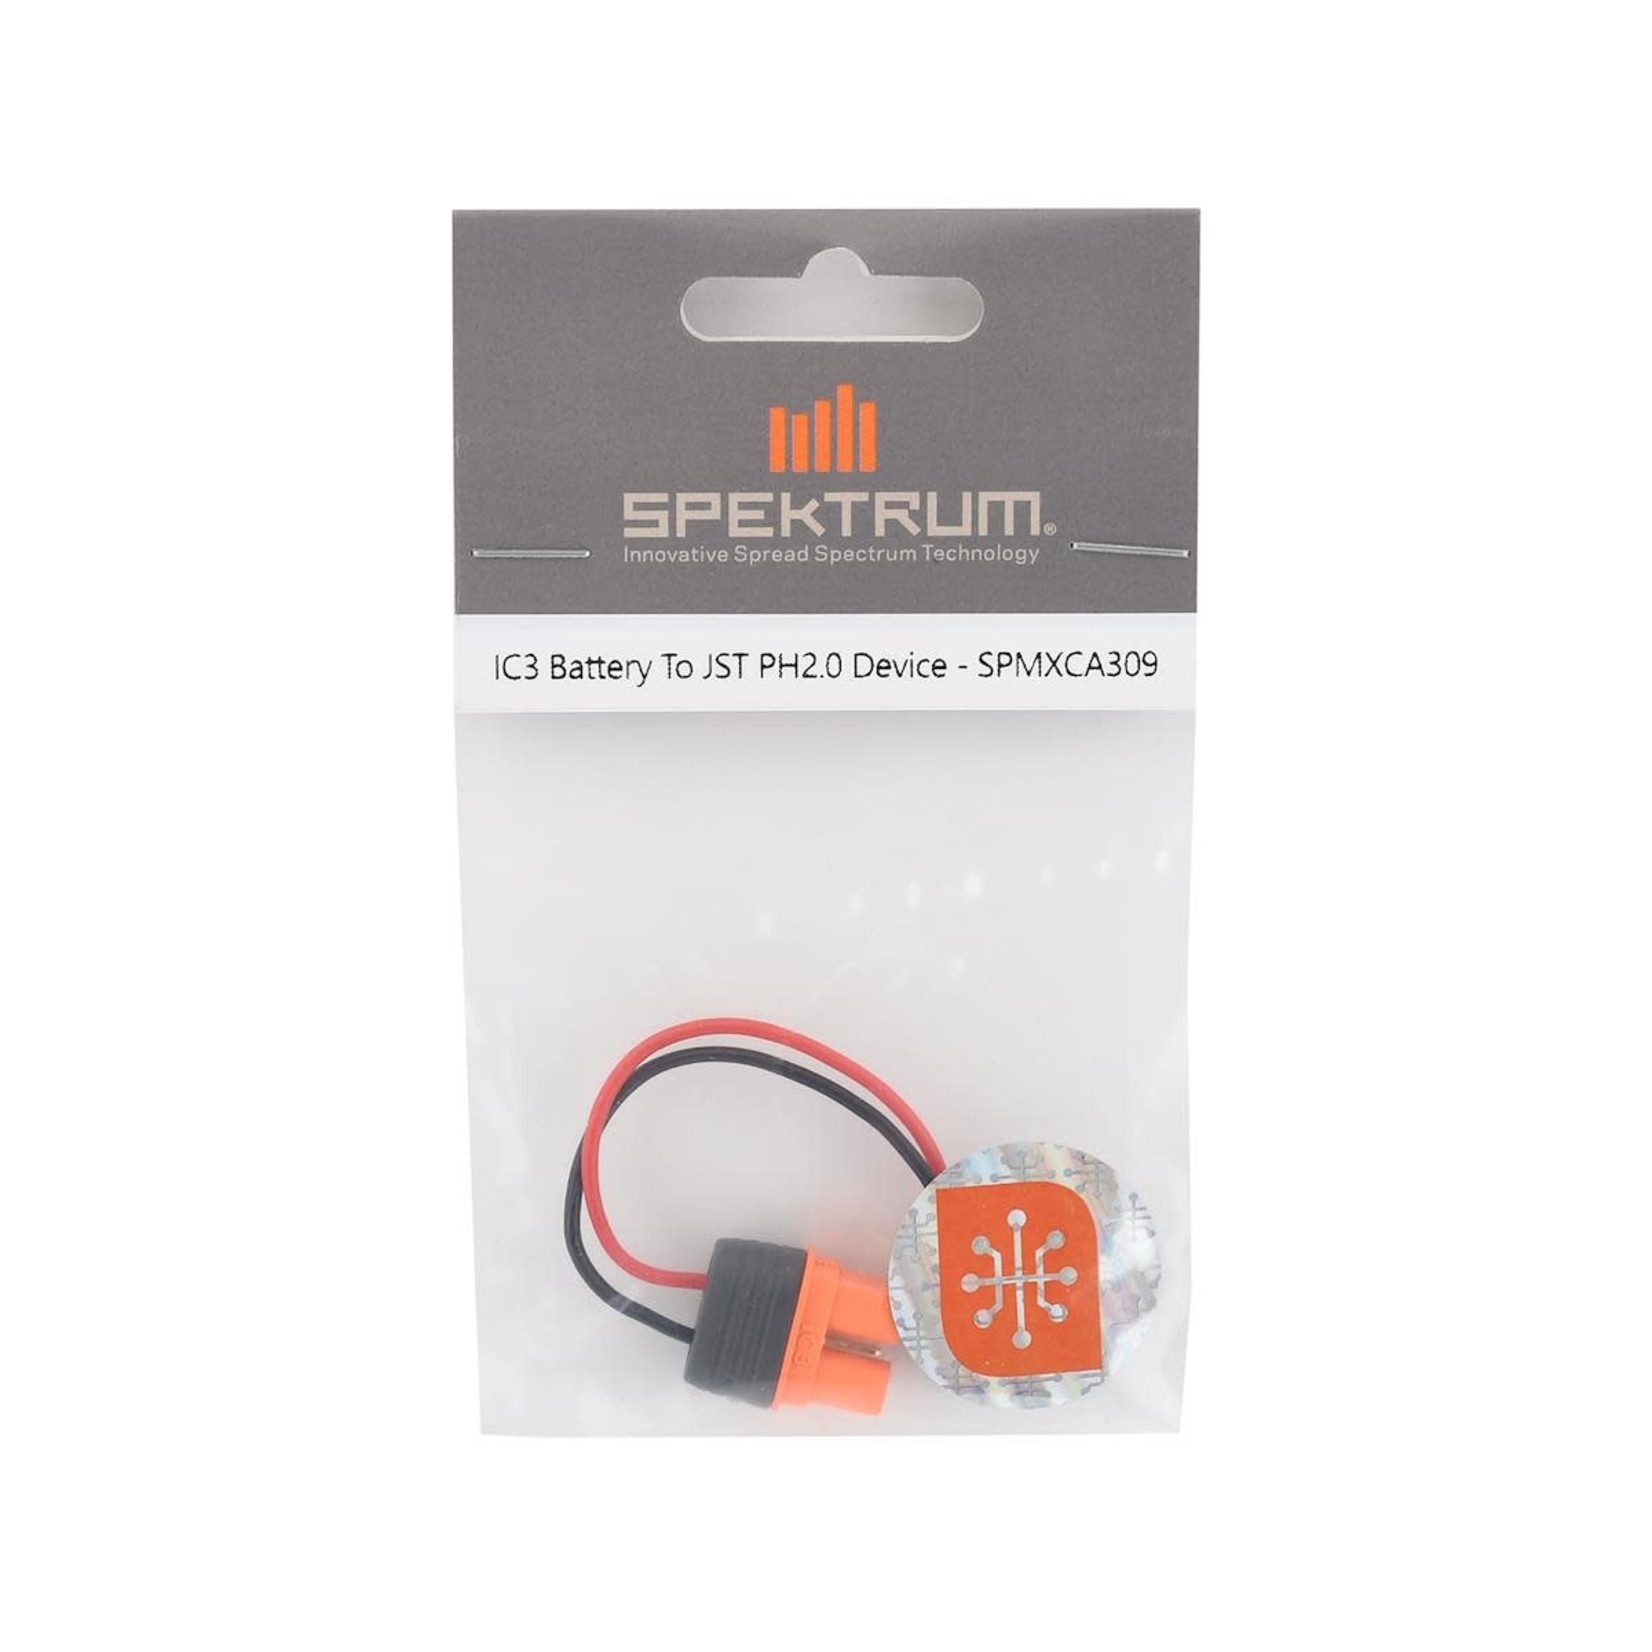 Spektrum Spektrum RC IC3 Device to JST PH2.0 Device #SPMXCA309